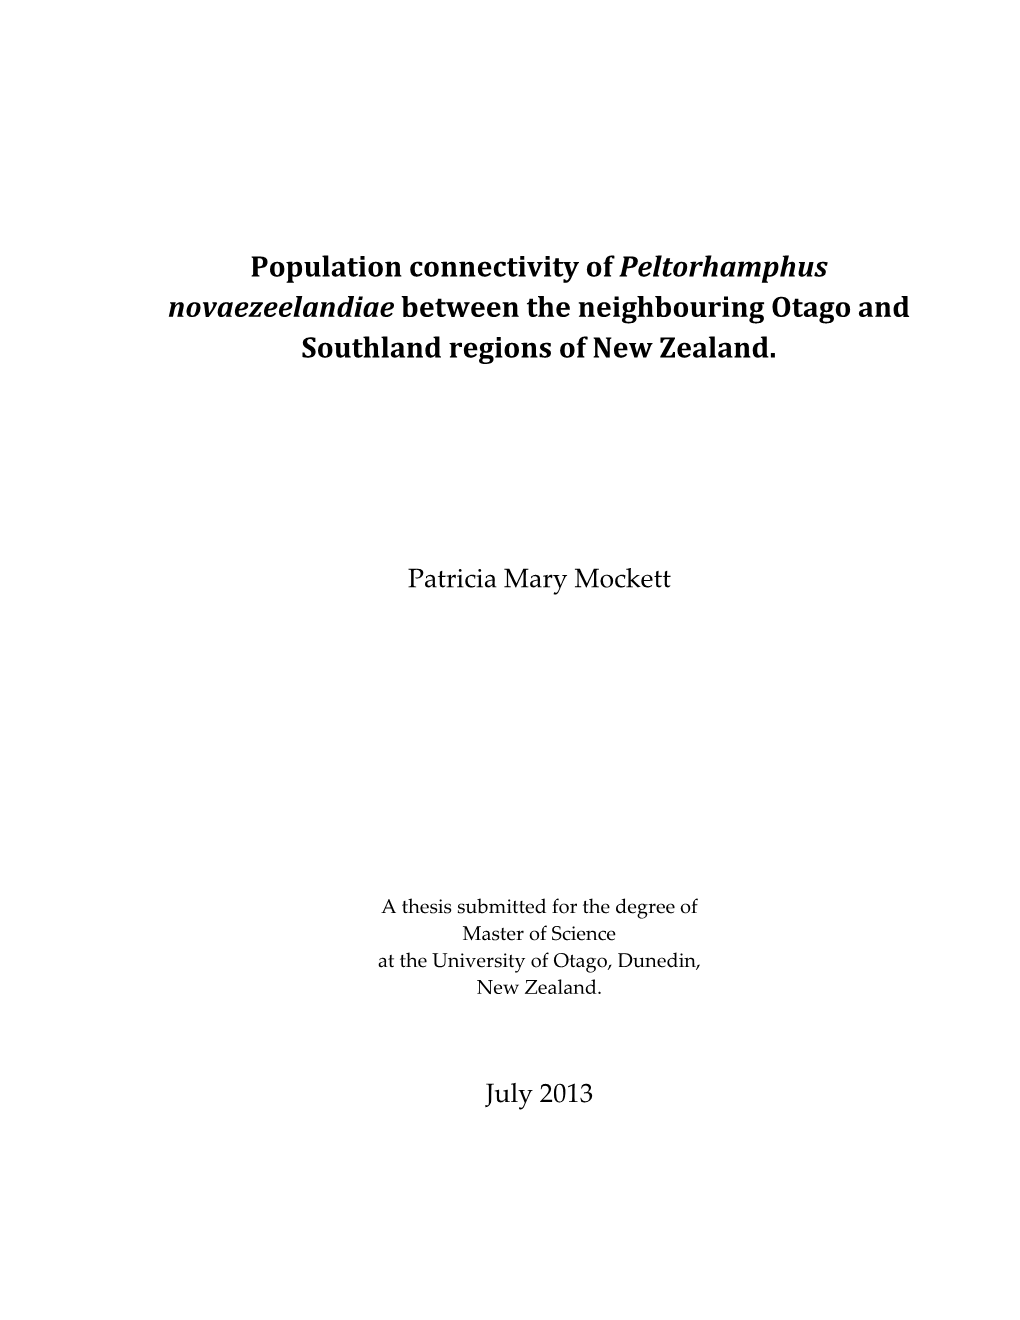 Population Connectivity of Peltorhamphus Novaezeelandiae Between the Neighbouring Otago and Southland Regions of New Zealand